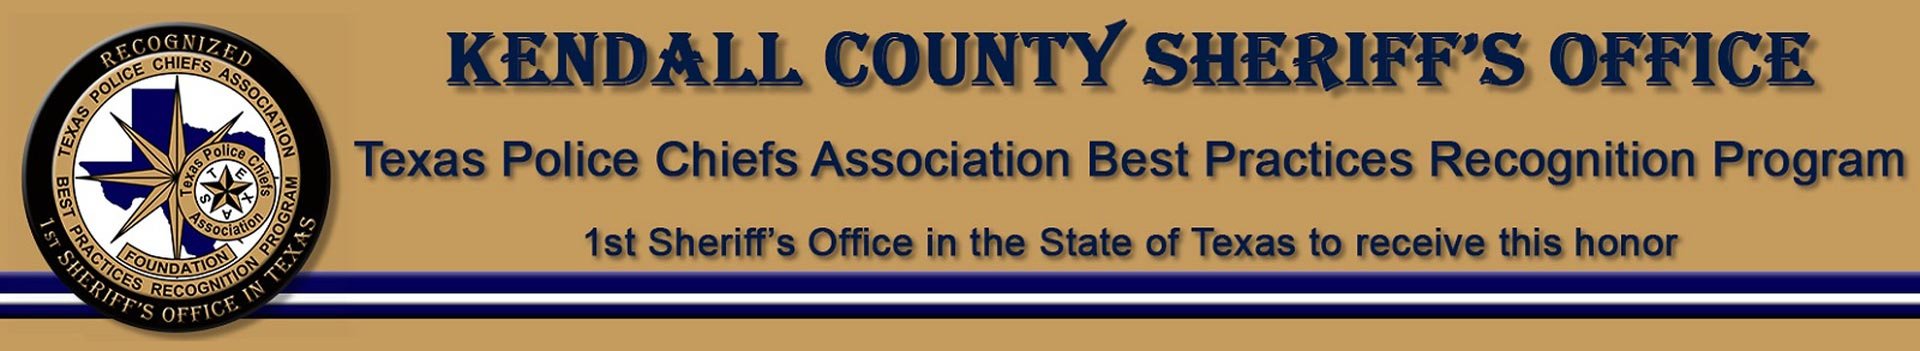 Texas Police Chiefs Association Best Practices Recognition Program